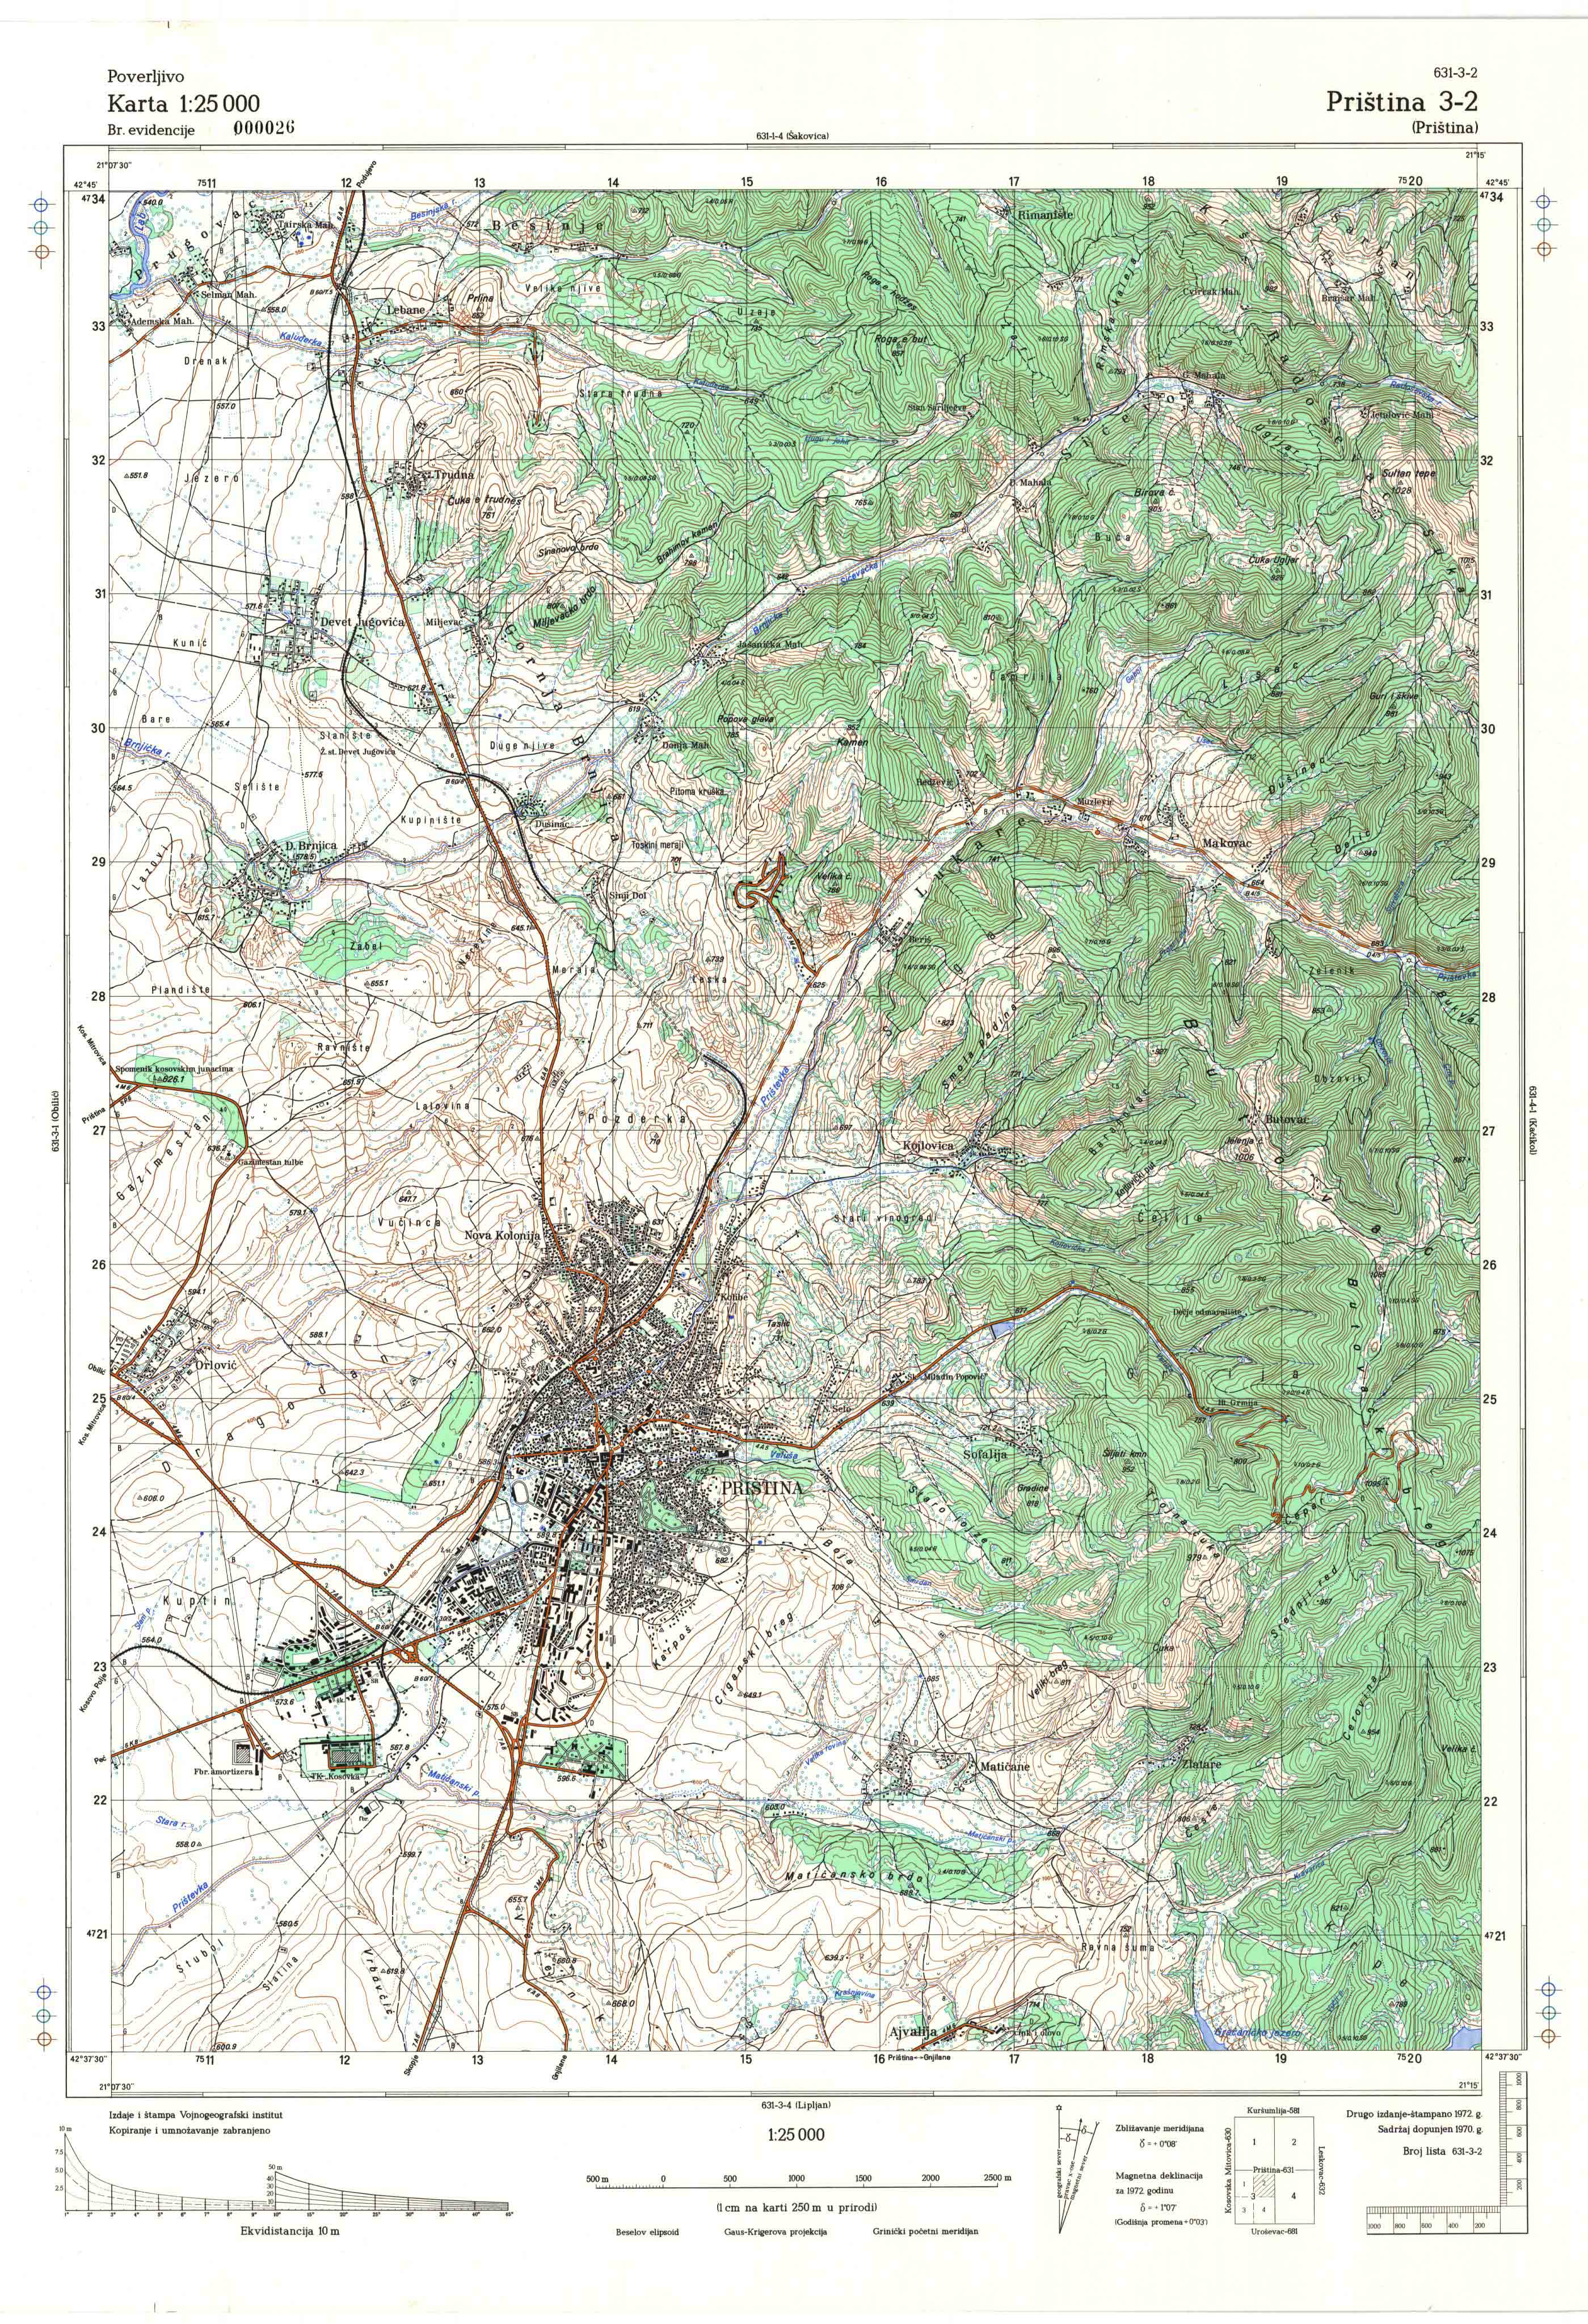  Harta Topografike e Kosoves